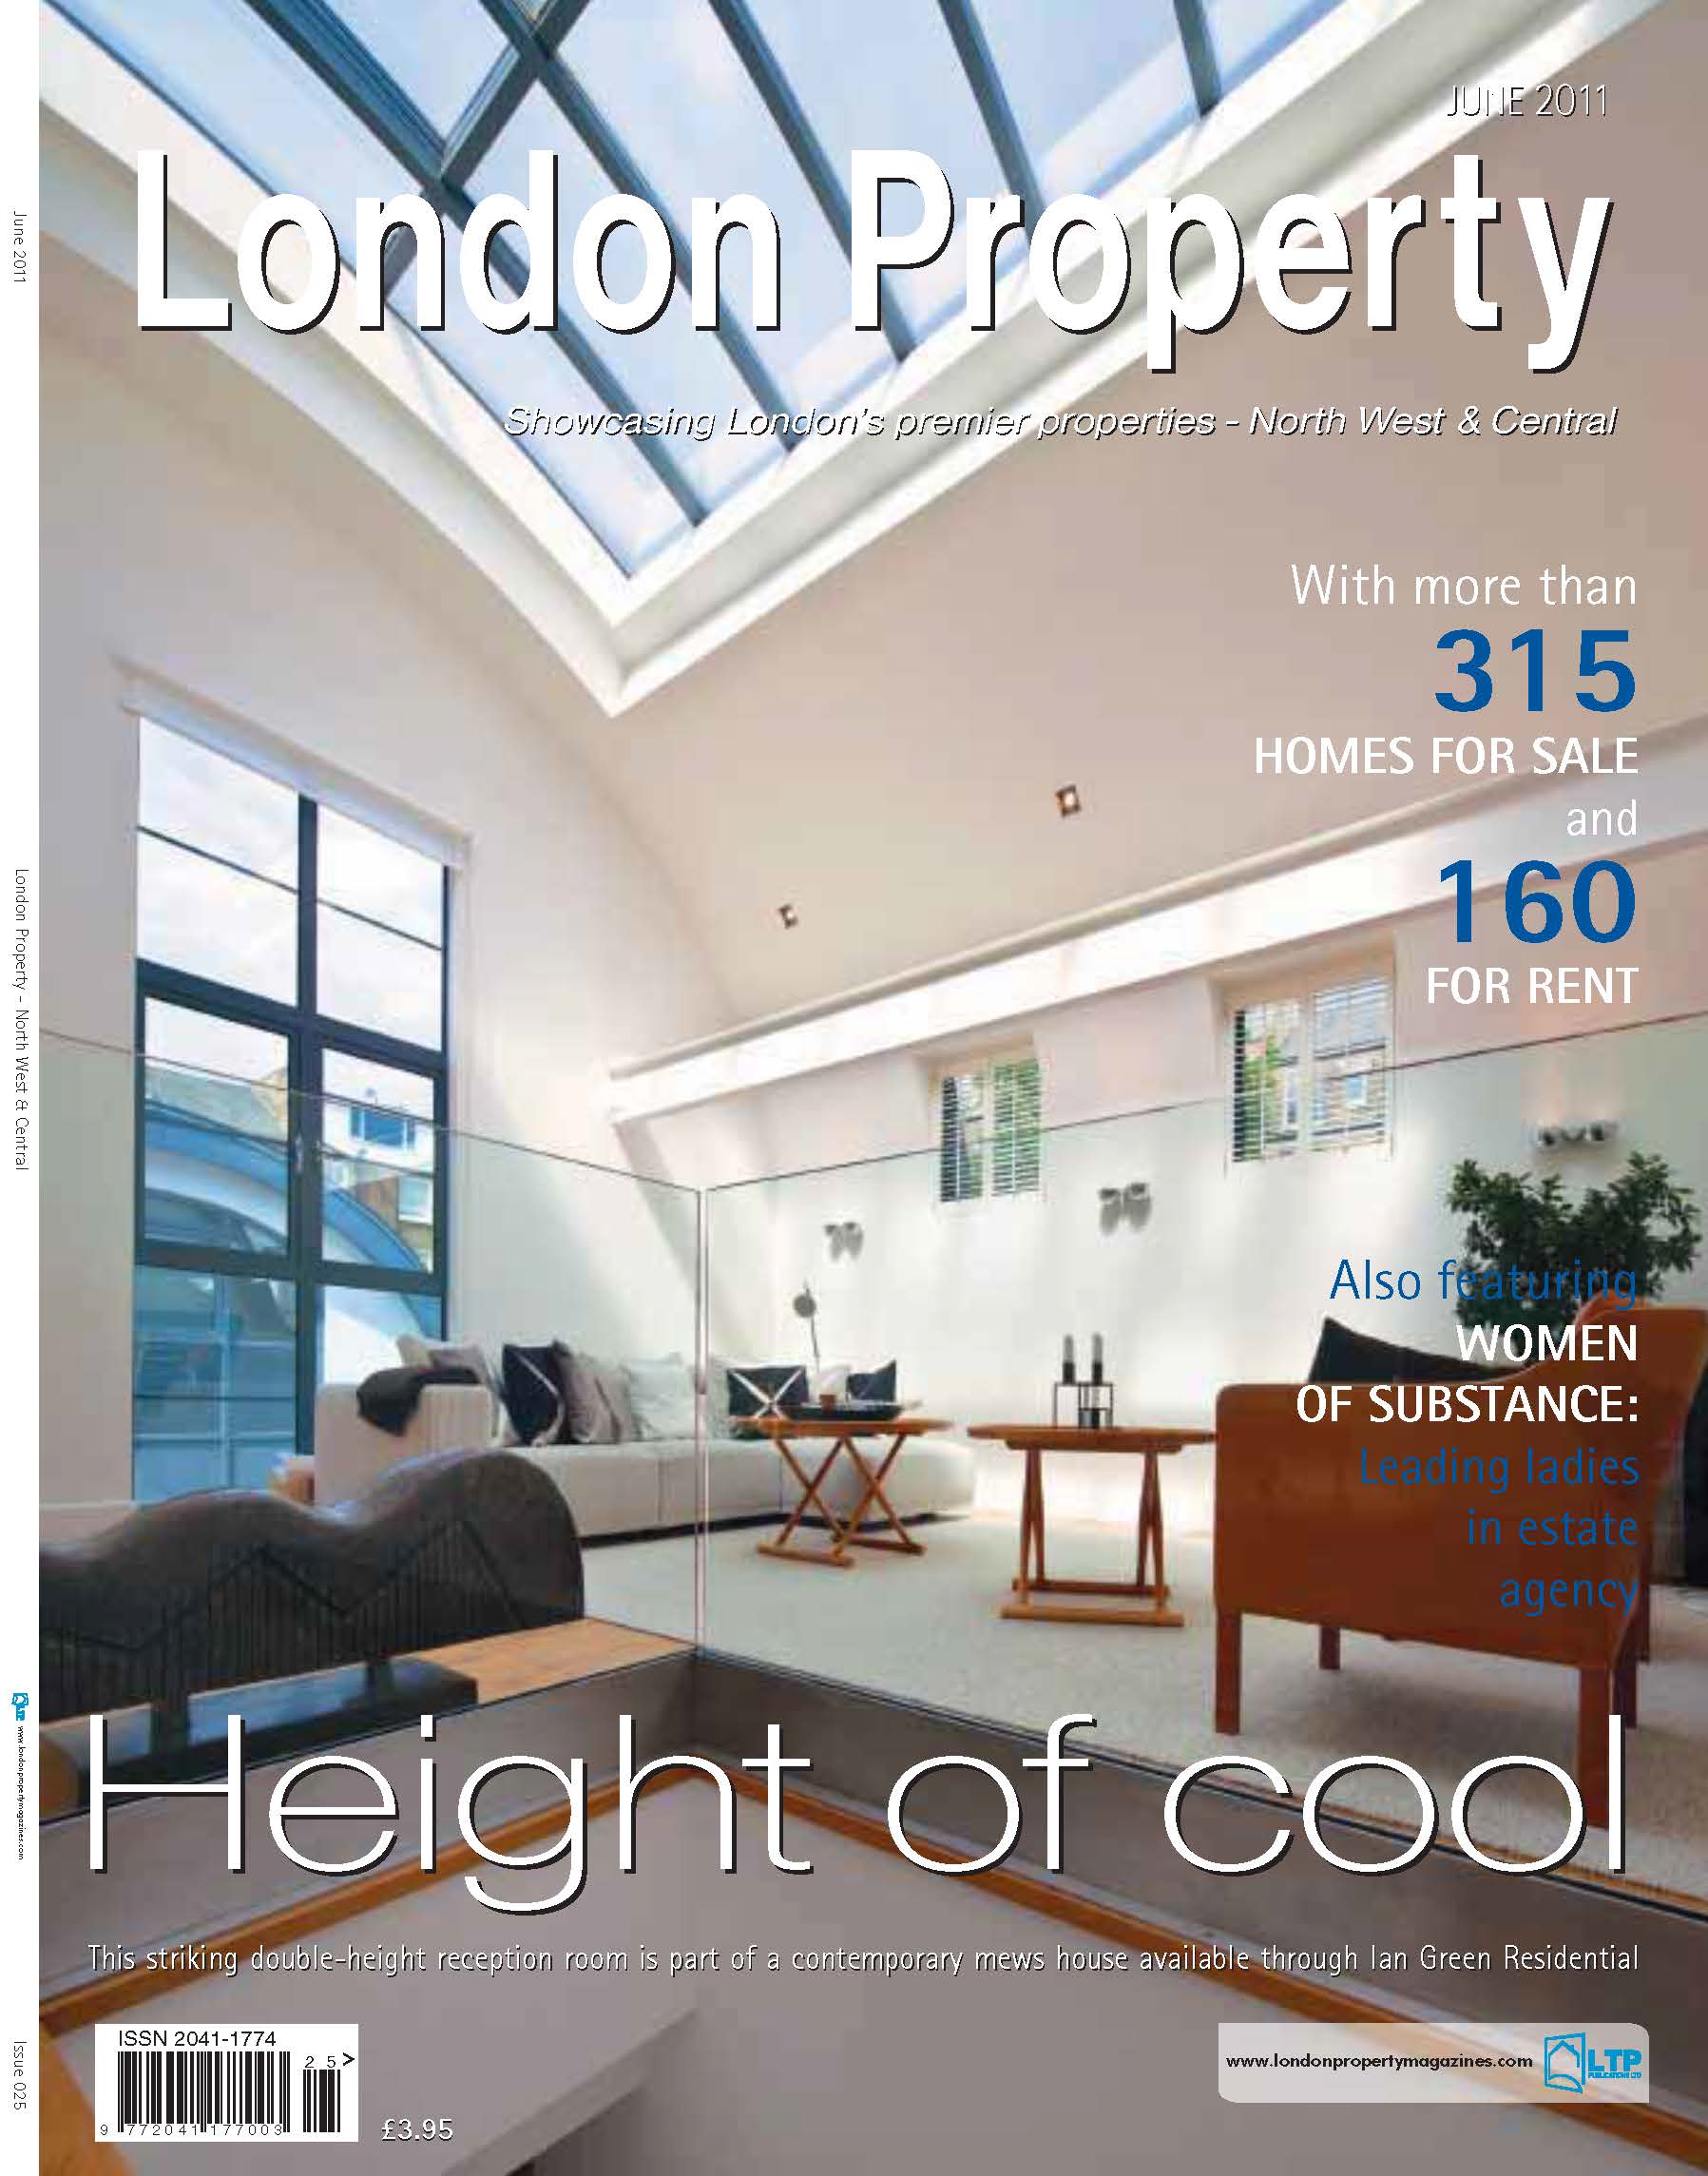 IanGreen-media-LONDON-PROPERTY-COVER-MAY-2011